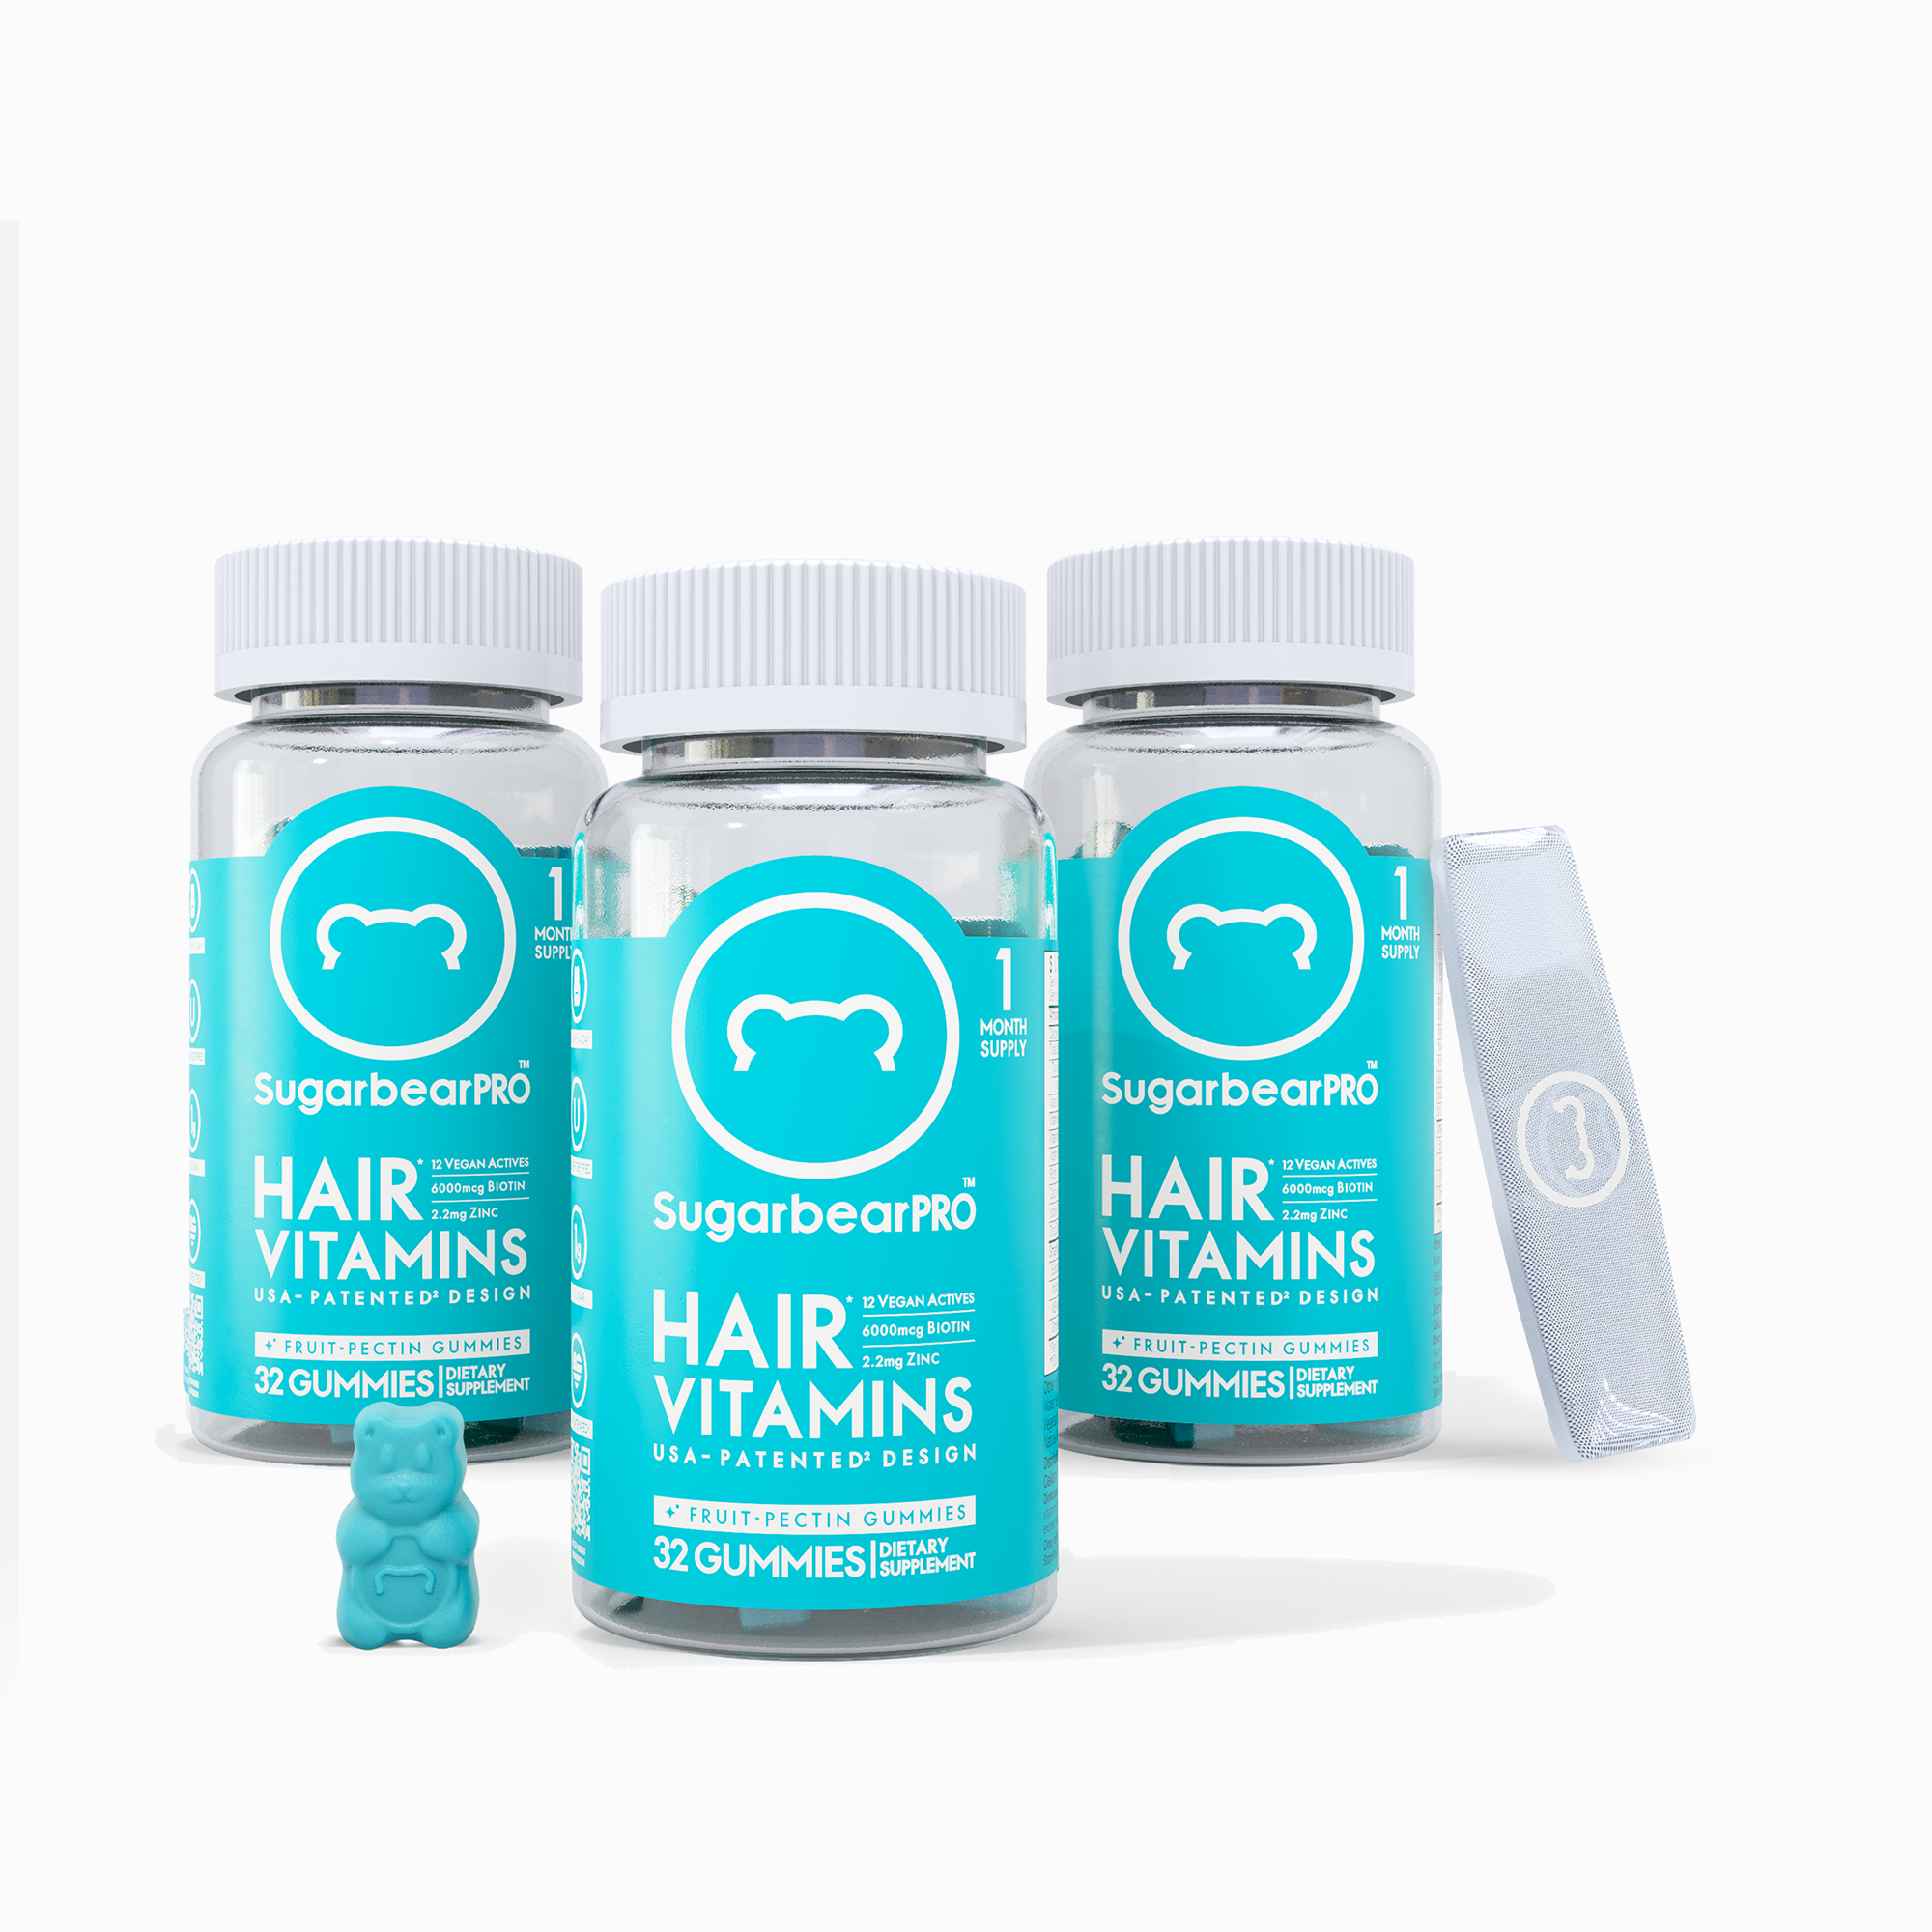 Sugarbear Pro Hair Vitamin Vegan Gummies - 3 Month Pack + Free Gift*